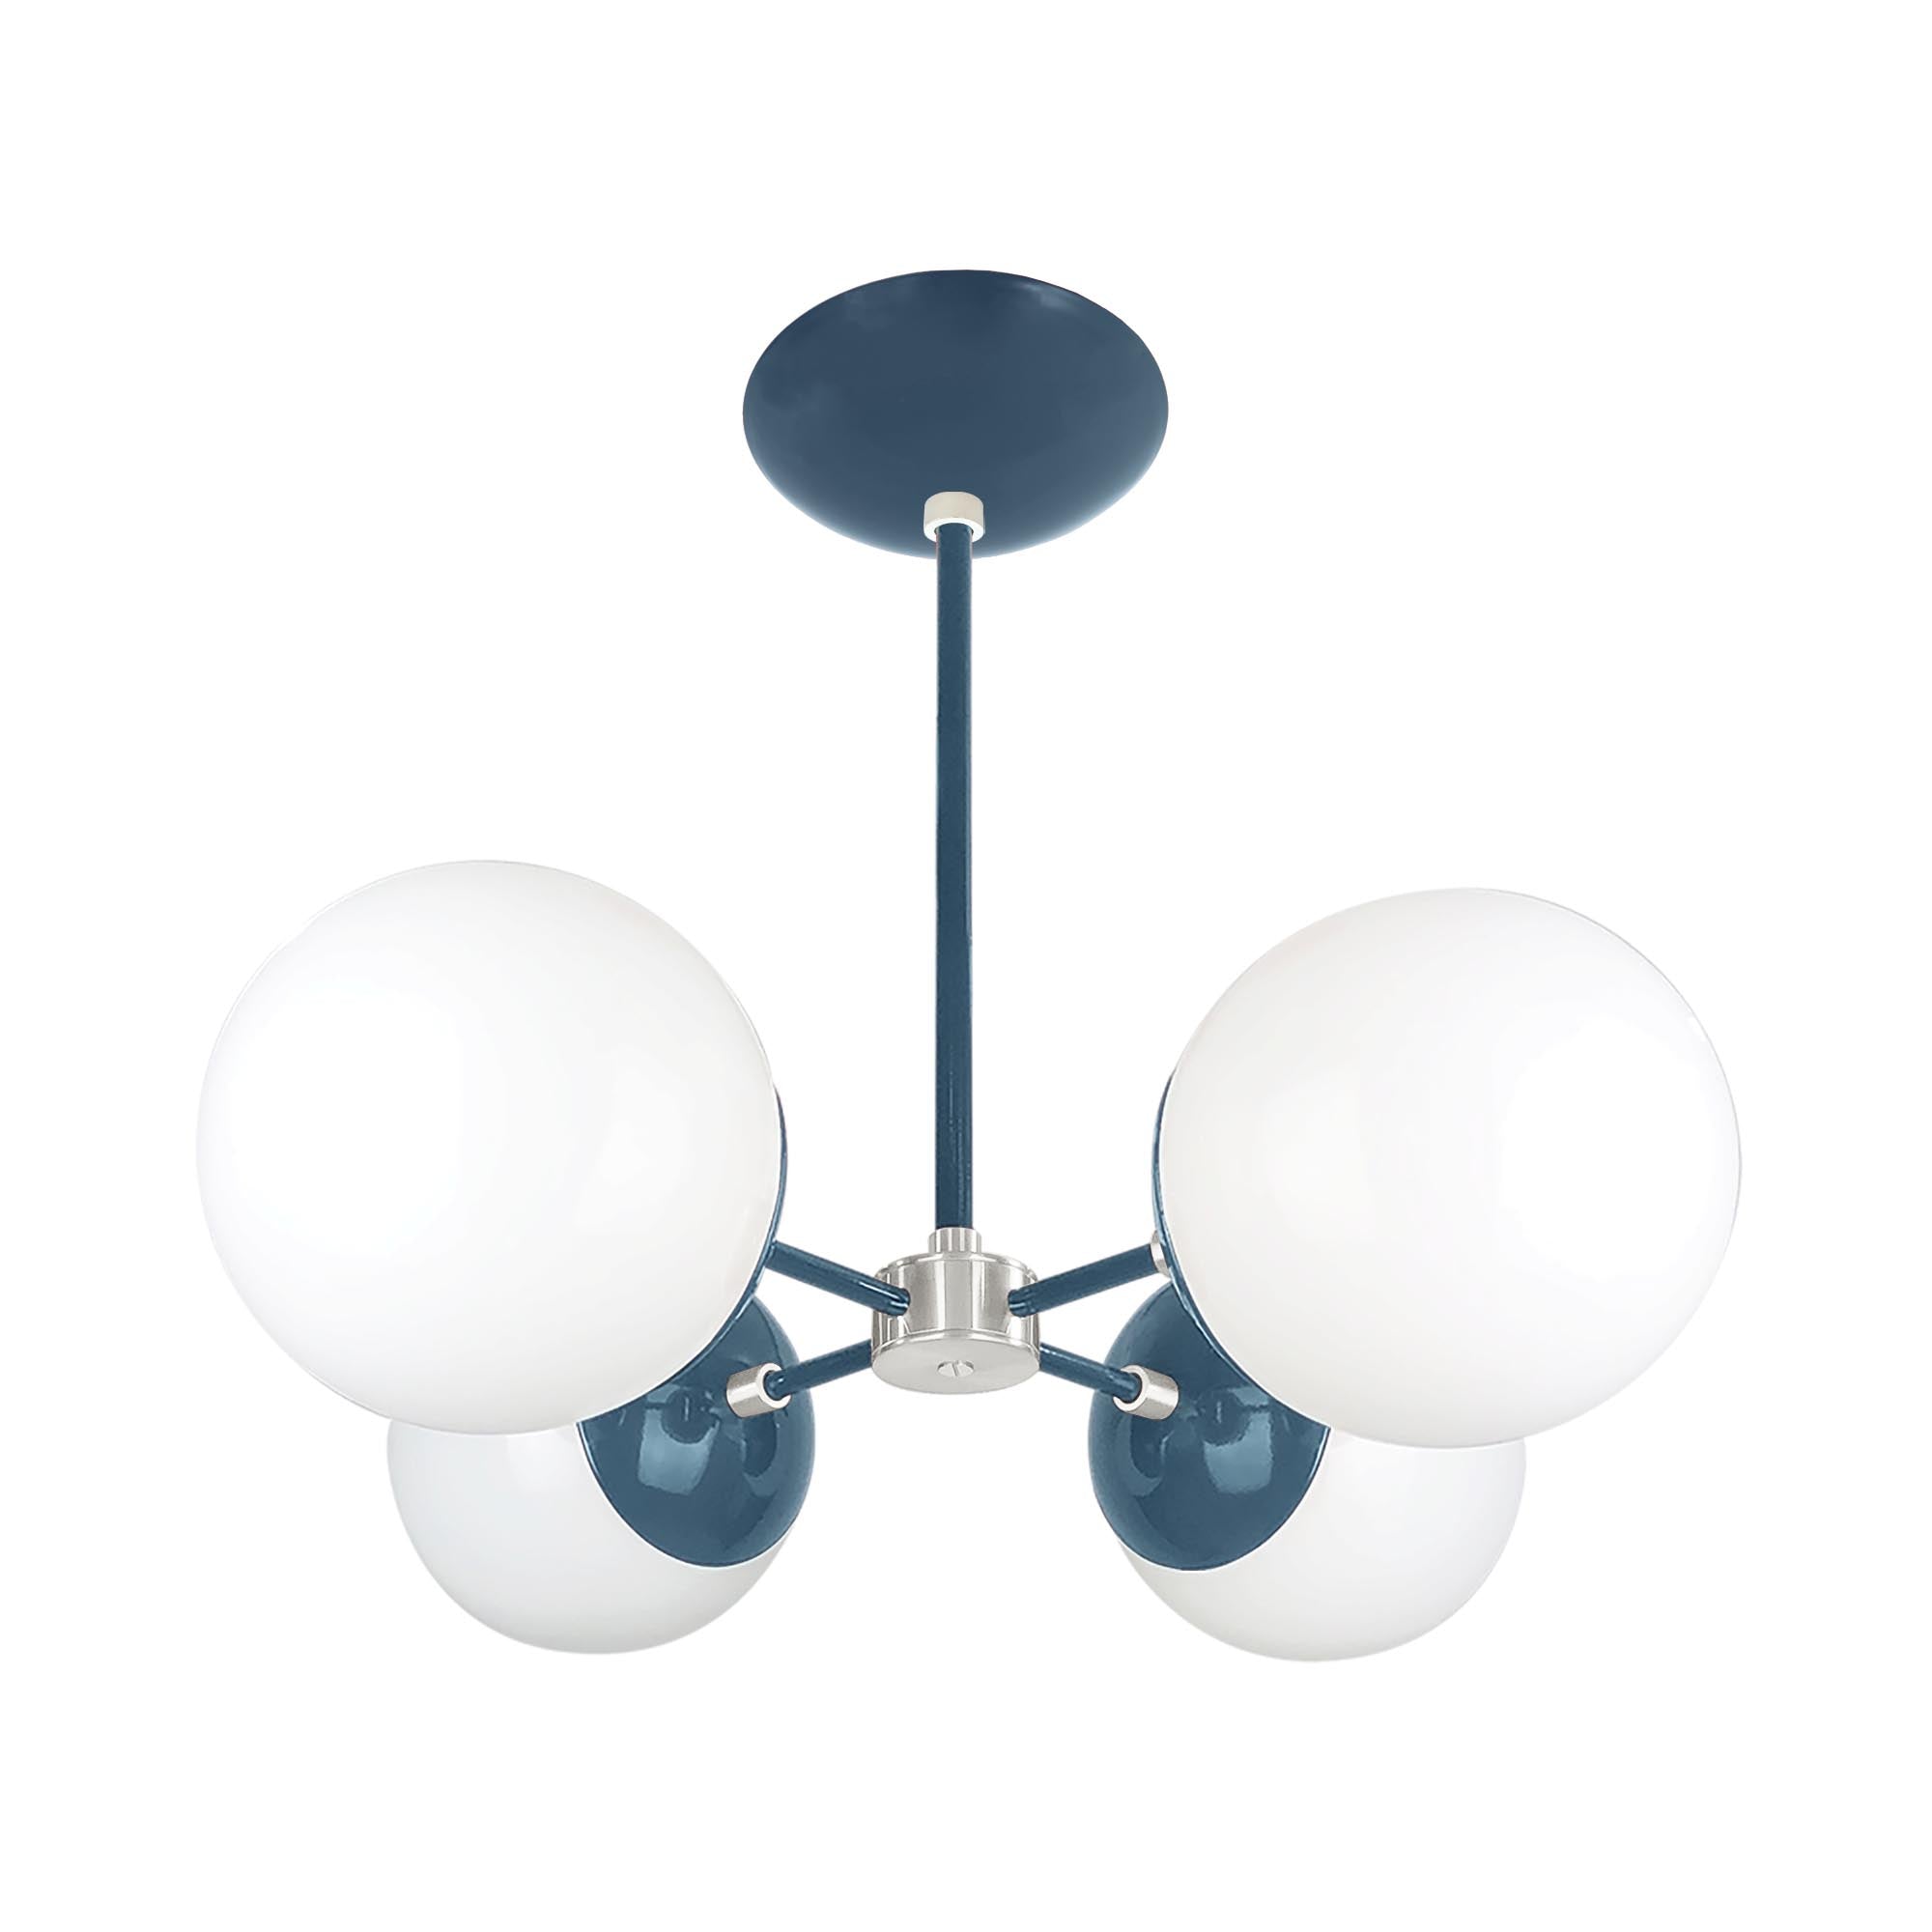 Nickel and slate blue color Orbi chandelier Dutton Brown lighting